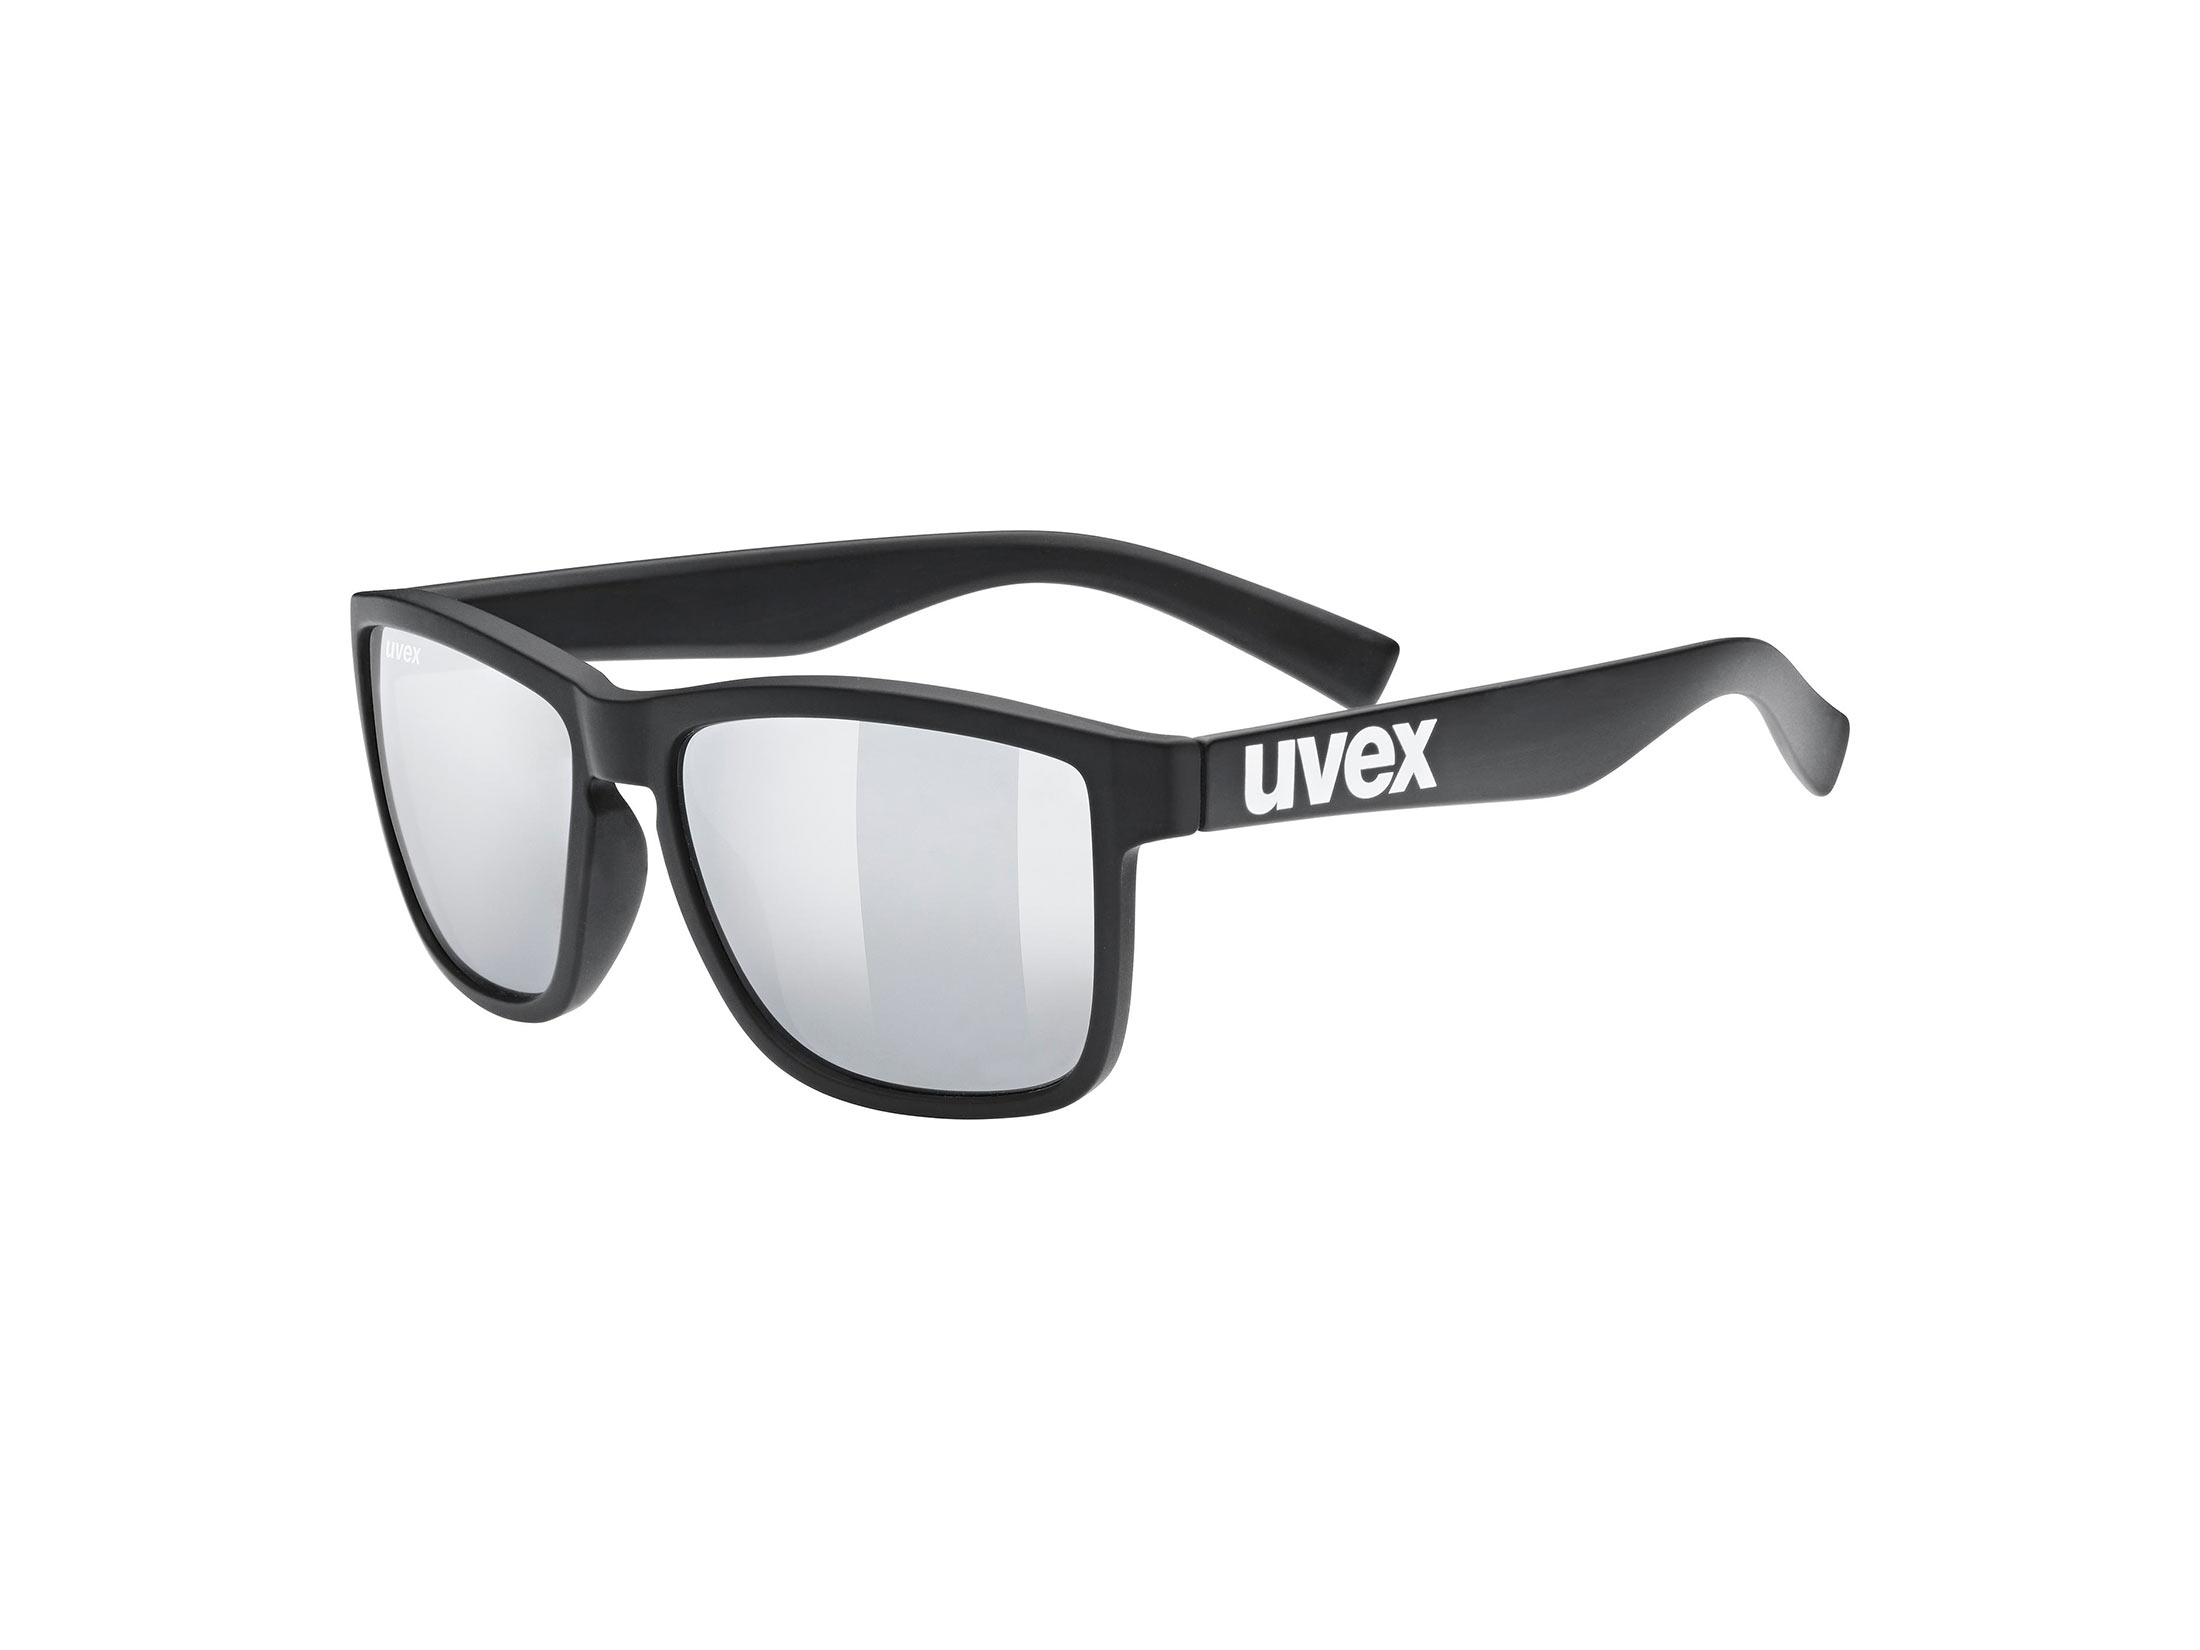 Uvex Lgl 39 Glasses